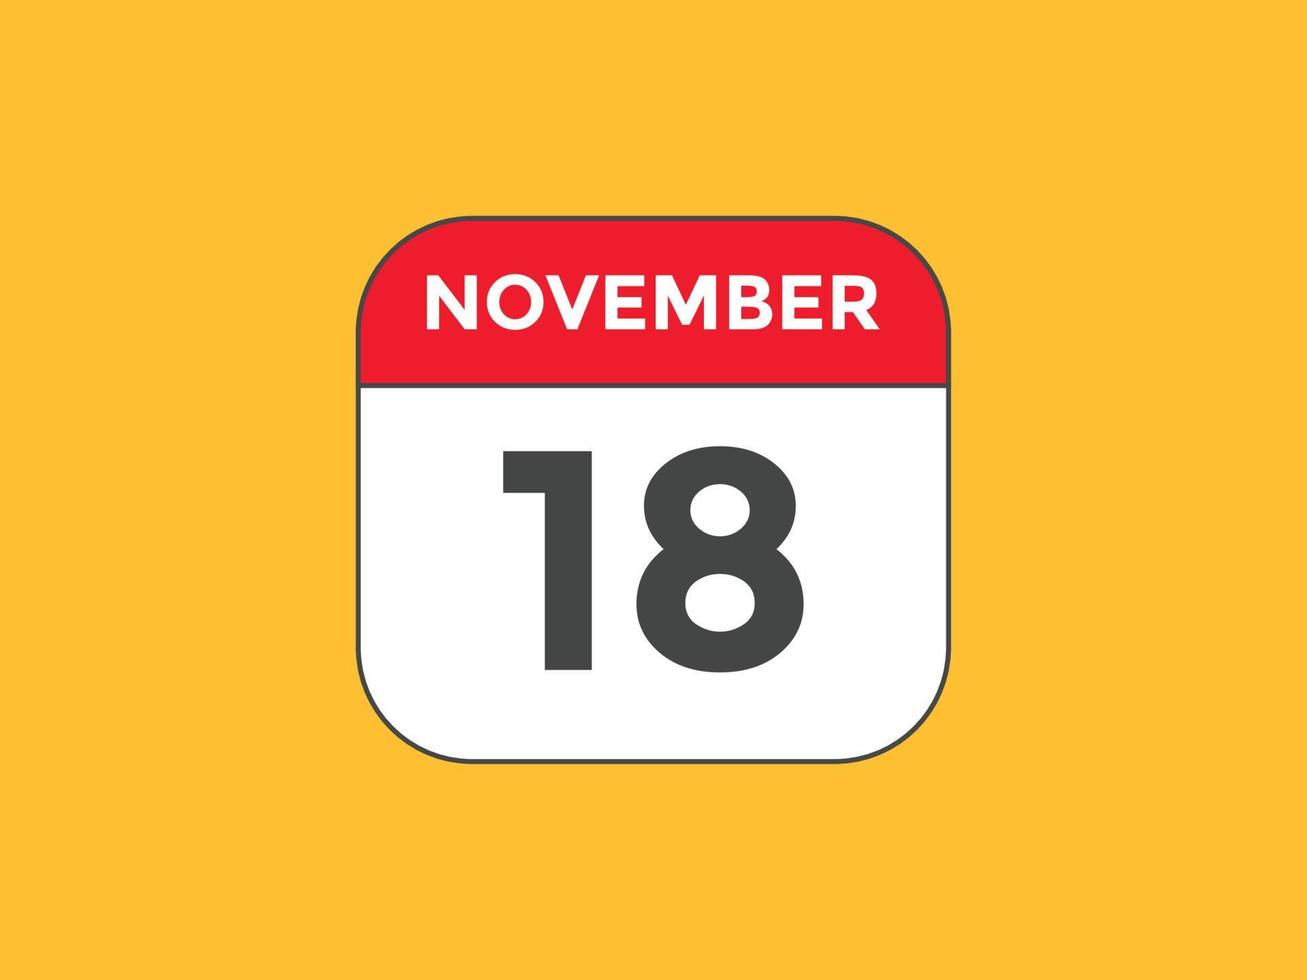 november 18 calendar reminder. 18th november daily calendar icon template. Calendar 18th november icon Design template. Vector illustration